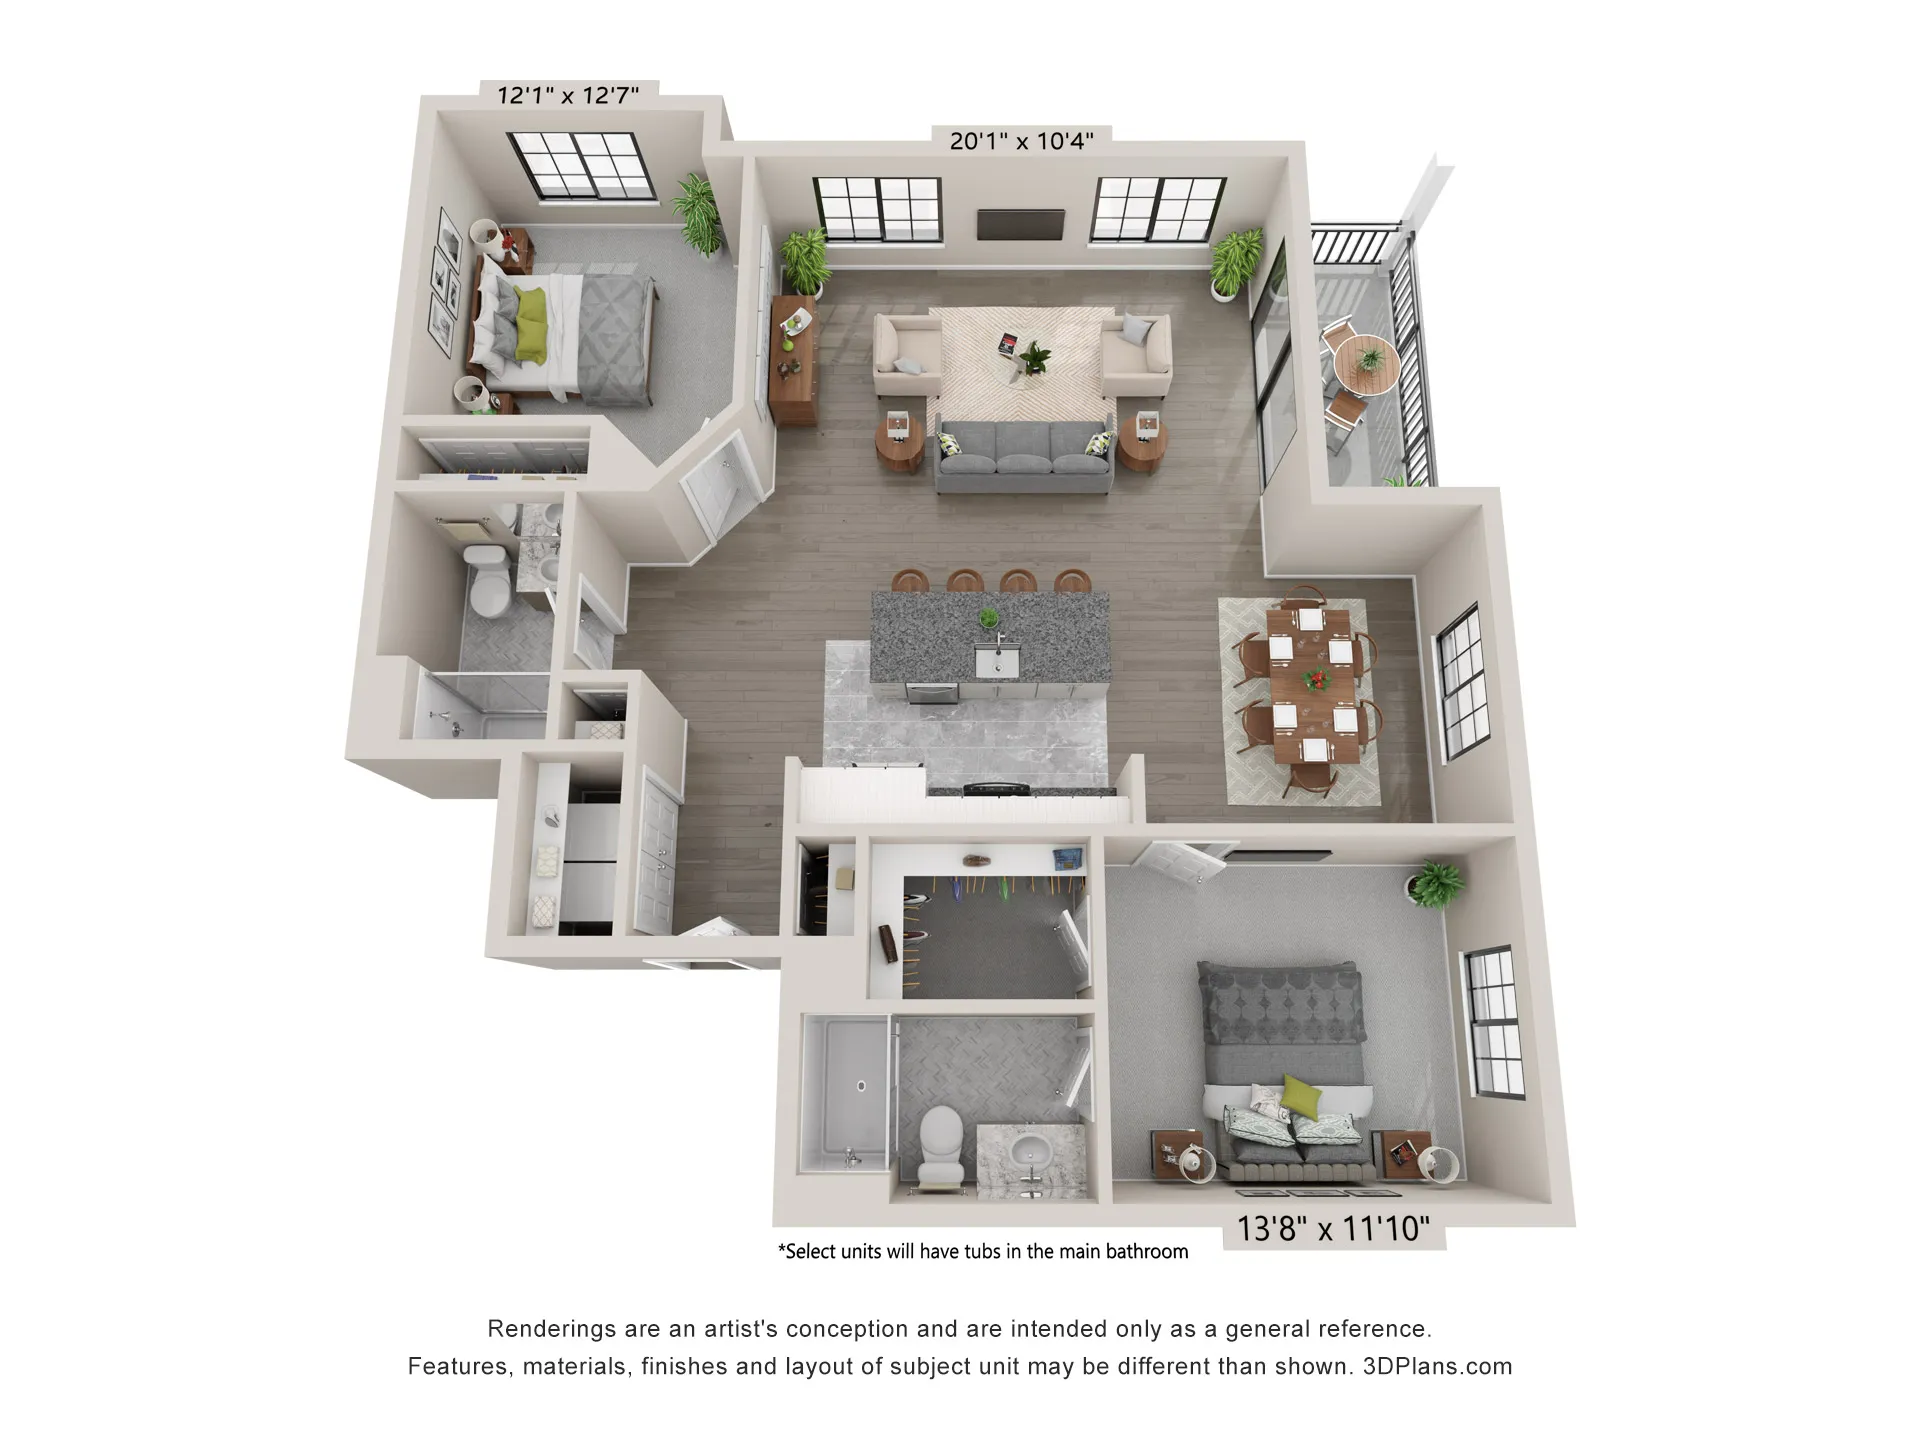 Floorplan Rendering of a 2 Bedroom, 2 Bathroom Luxury Apartment with Private Balcony